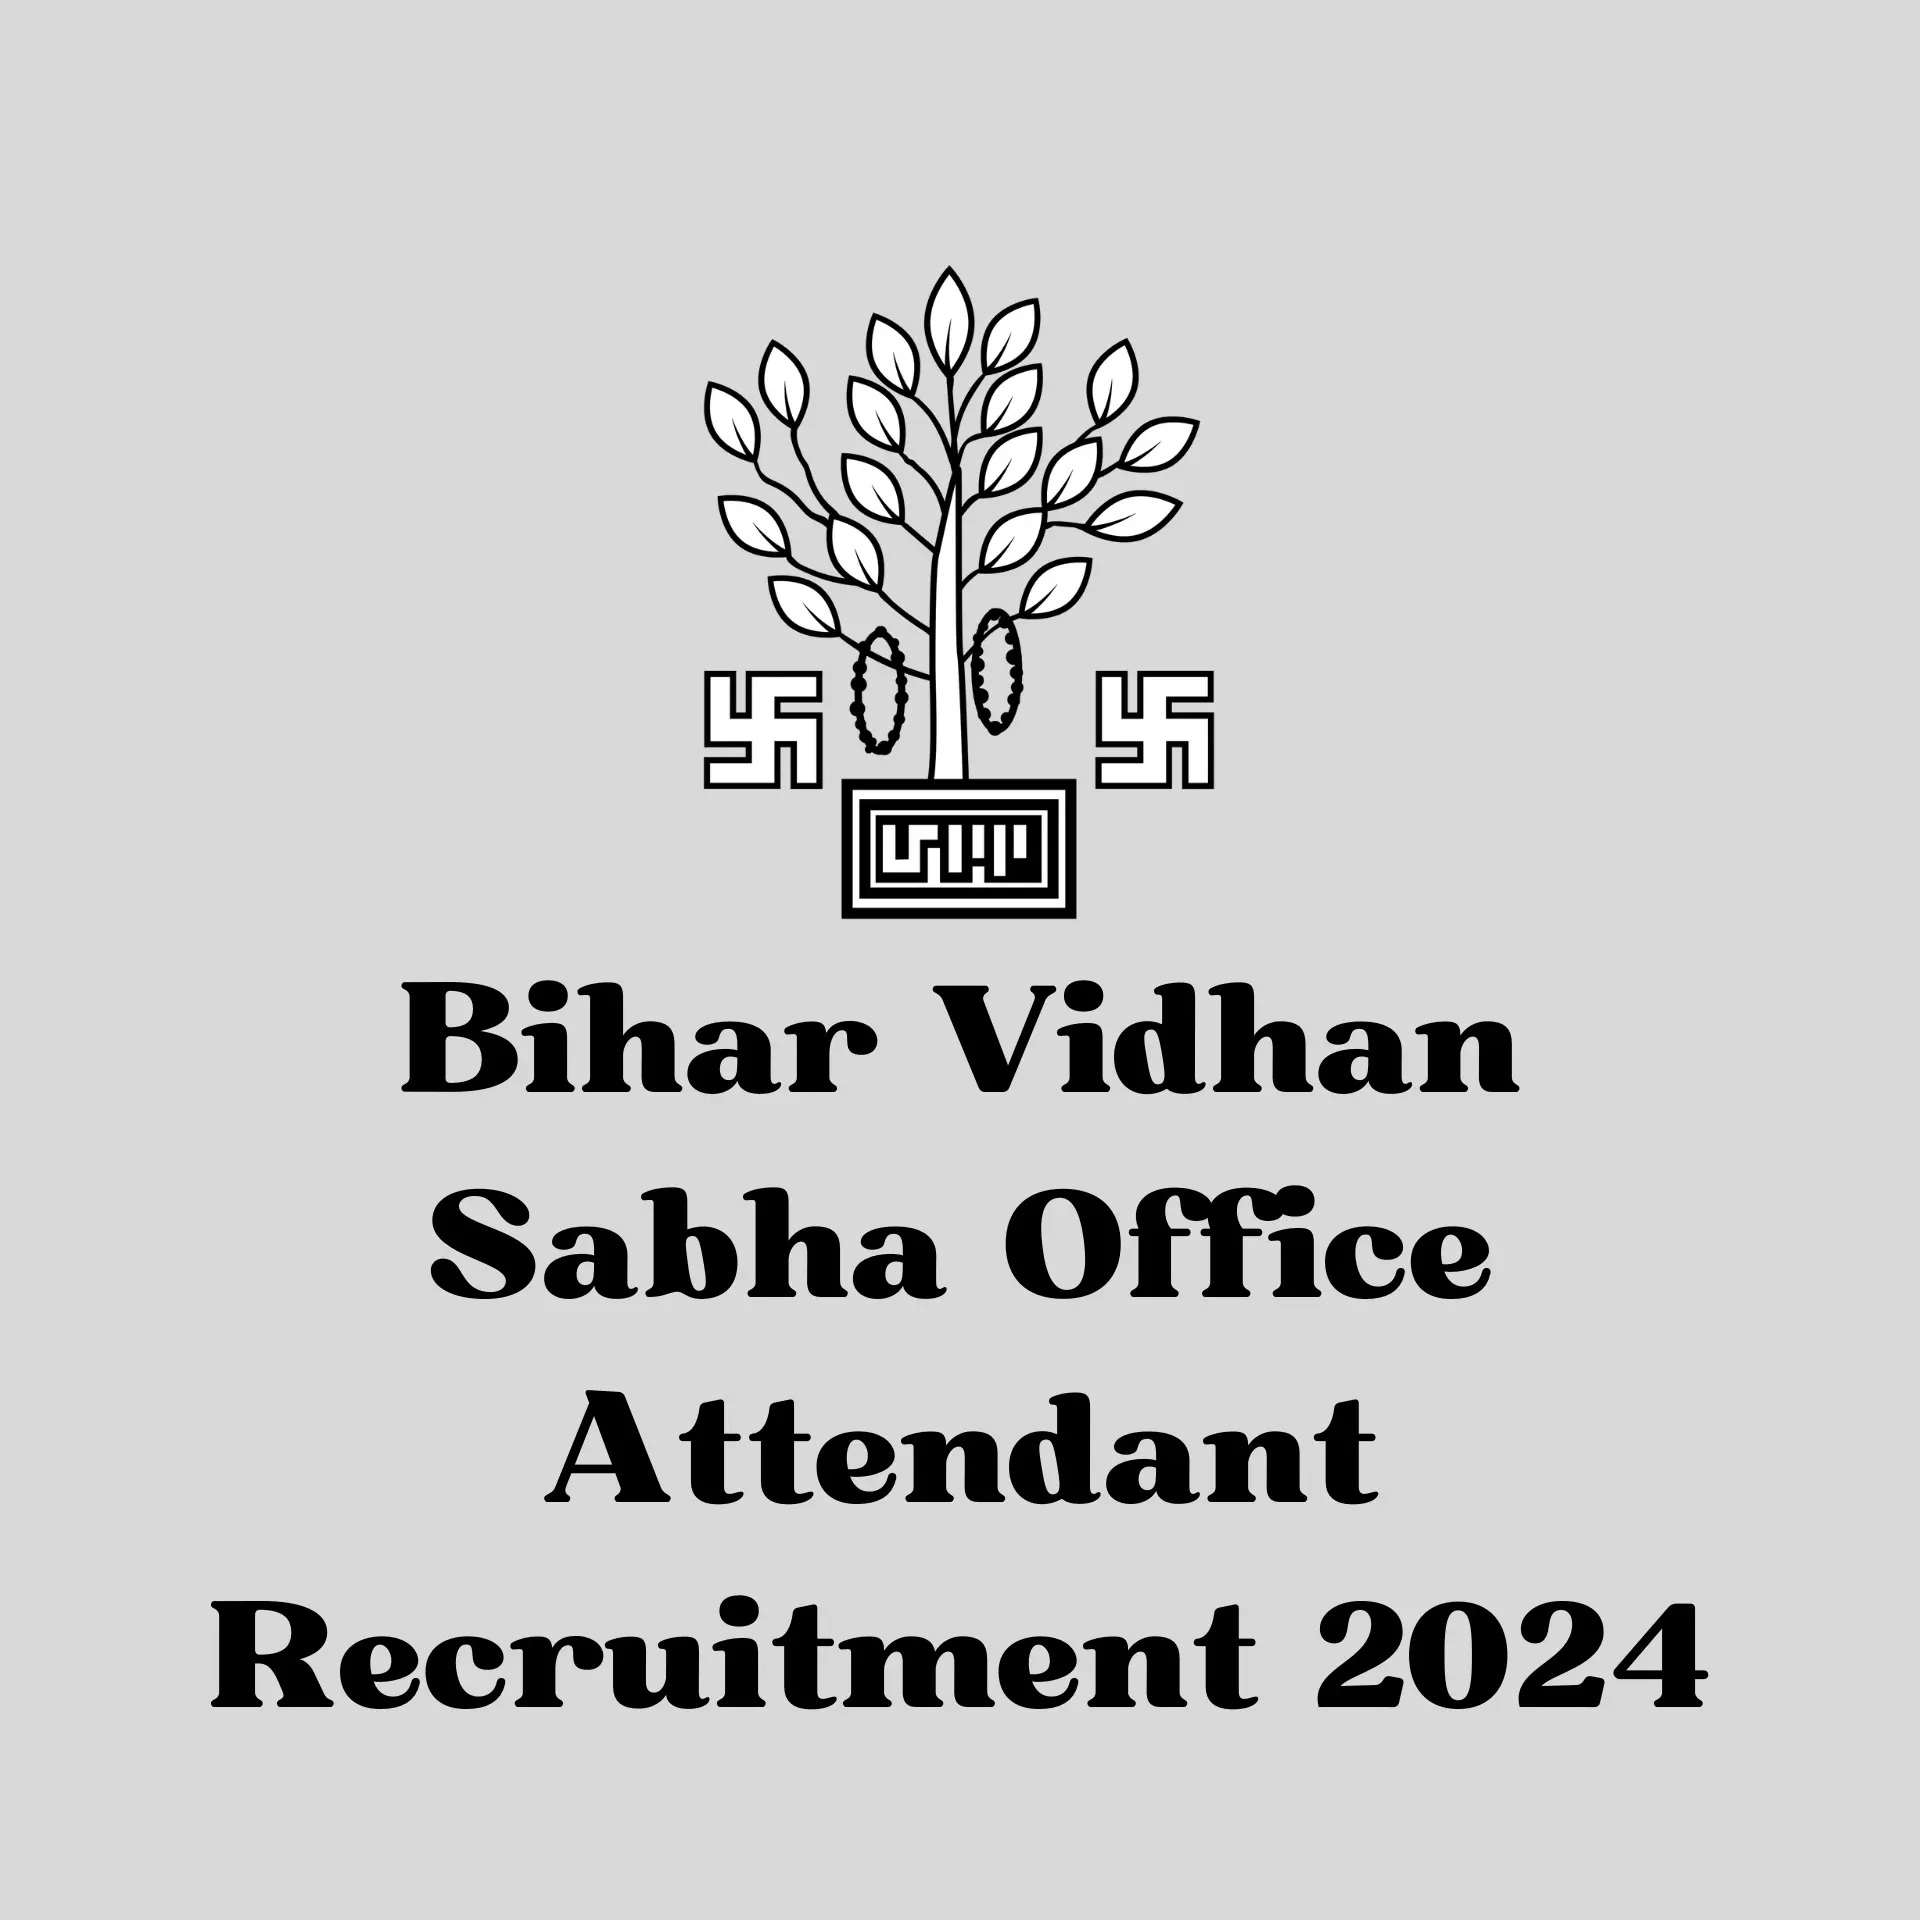 Bihar Vidhan Sabha Office Attendant Recruitment 2024